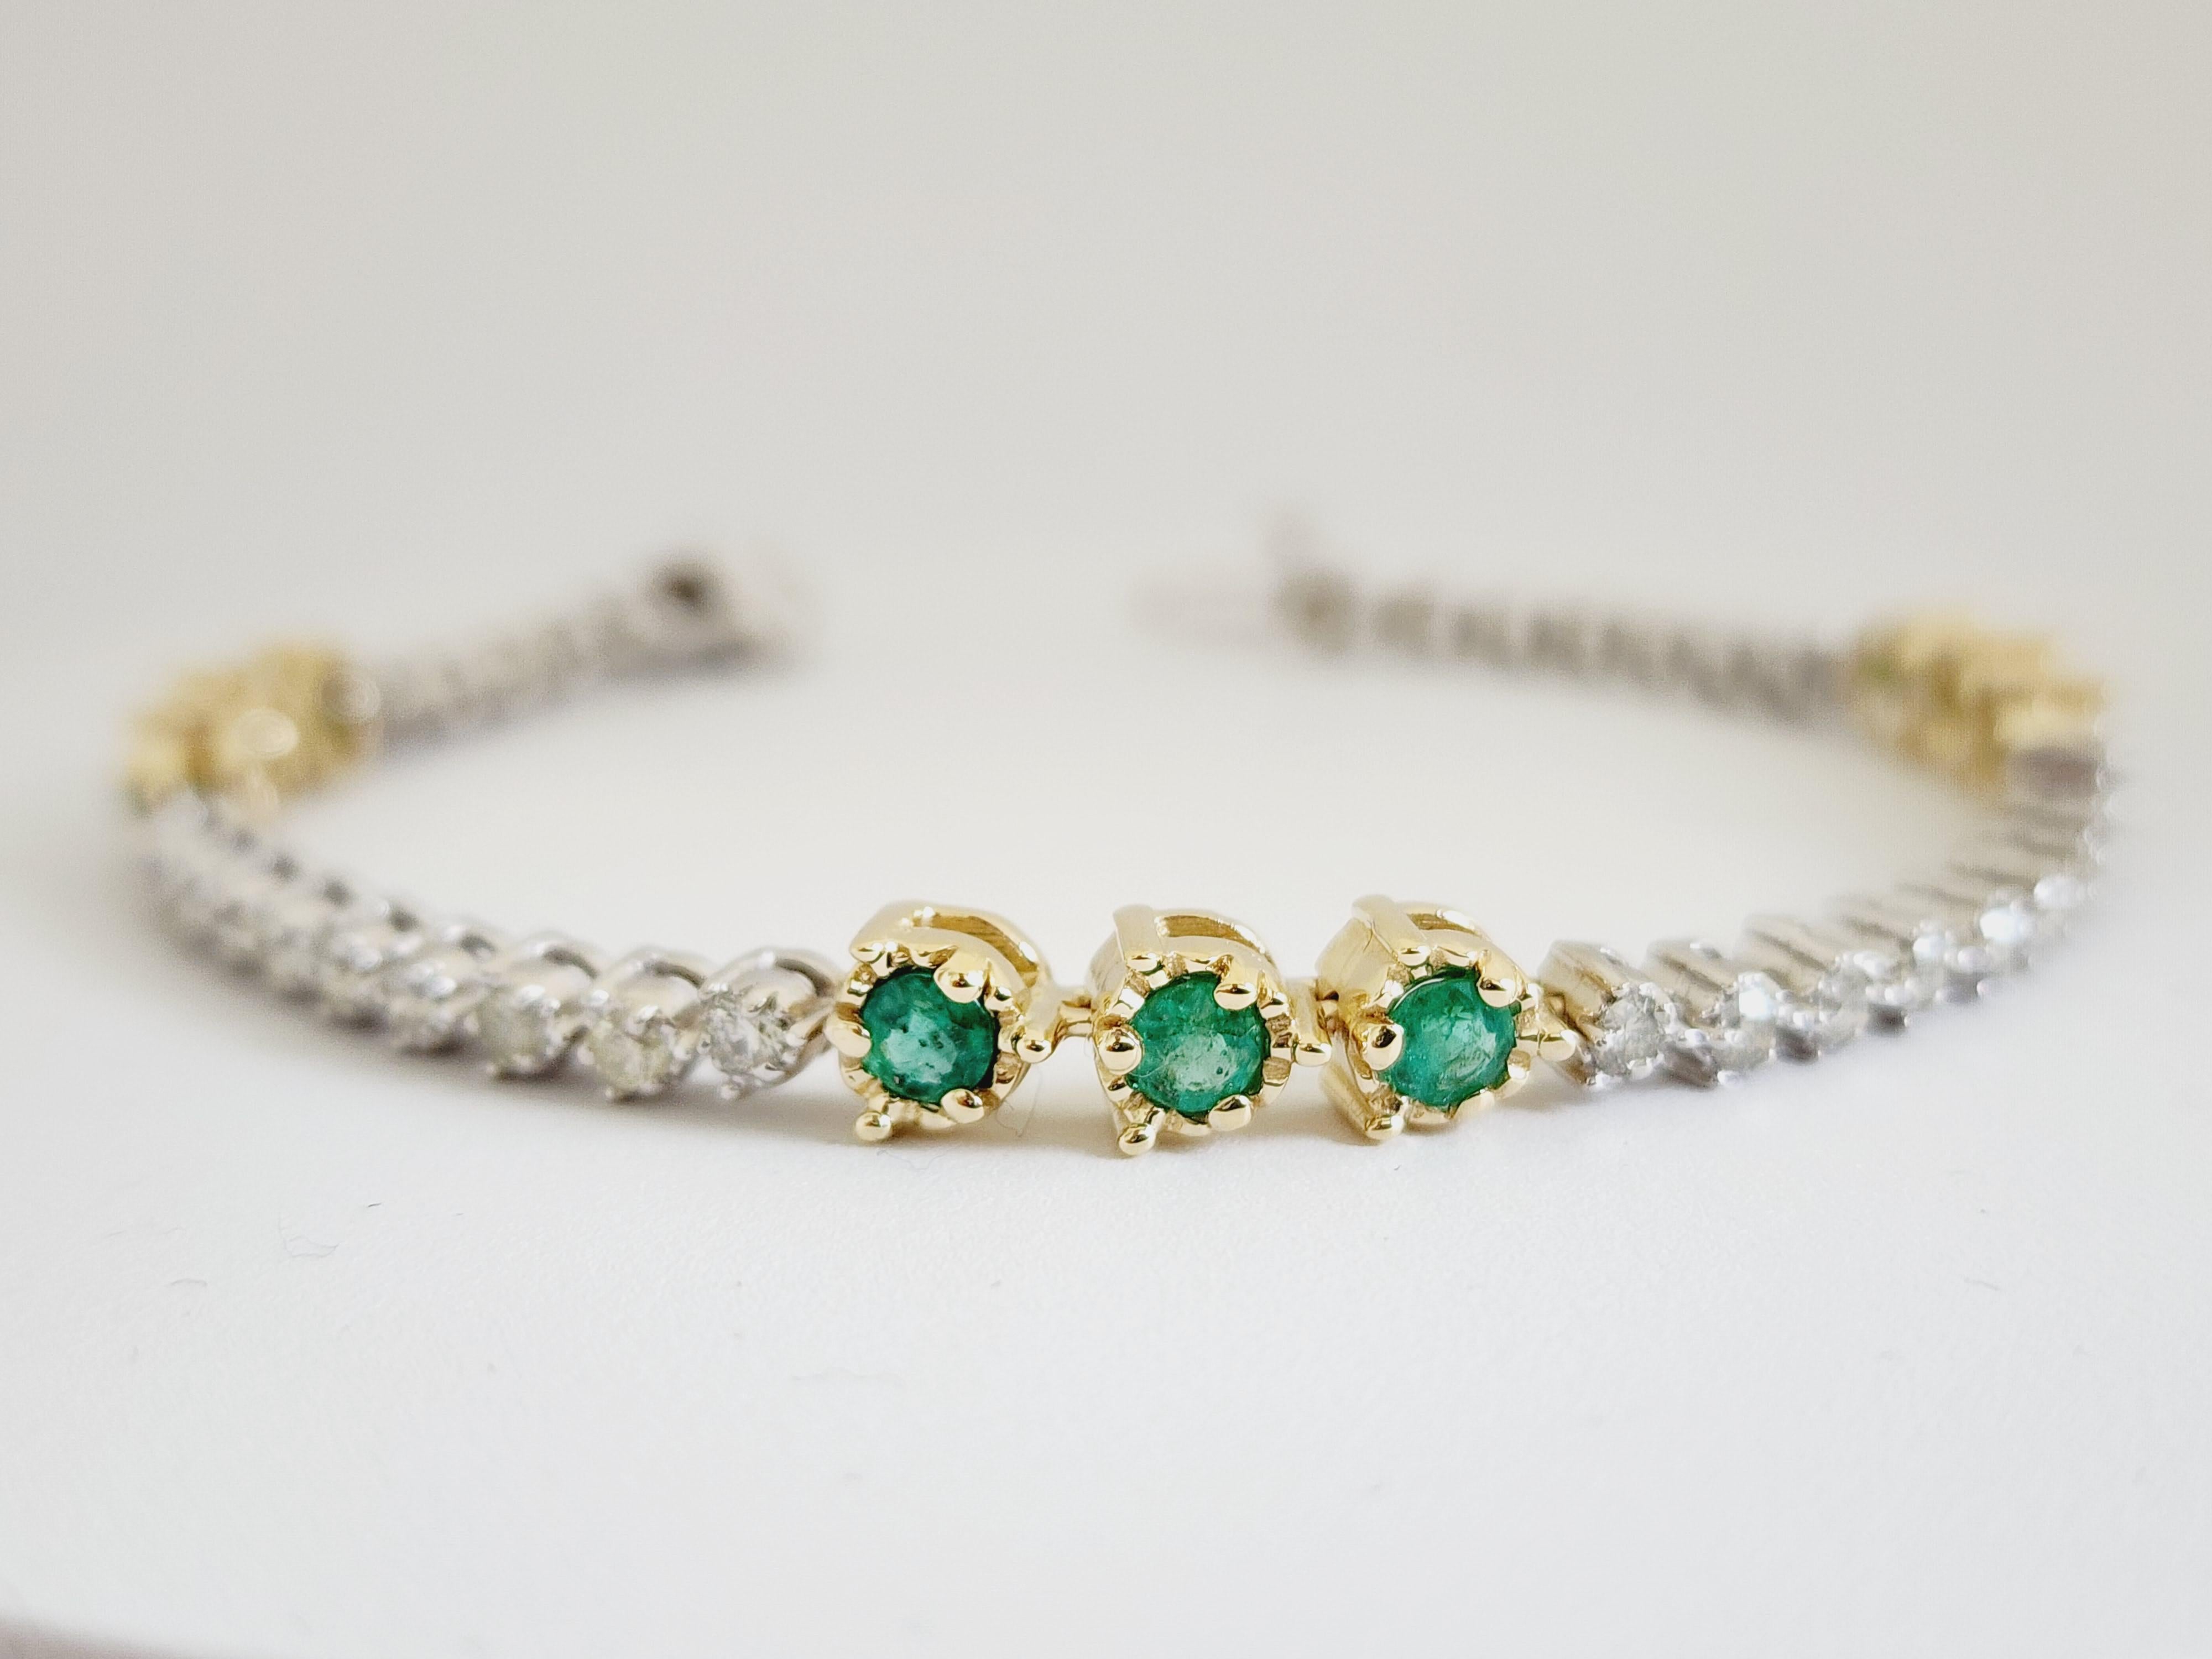 Emerald Diamond Tennis Bracelet 14 Karat Two Tone Gold 7 inch
1.44 cts Natural Emeralds
1.66 cts Natural Diamonds